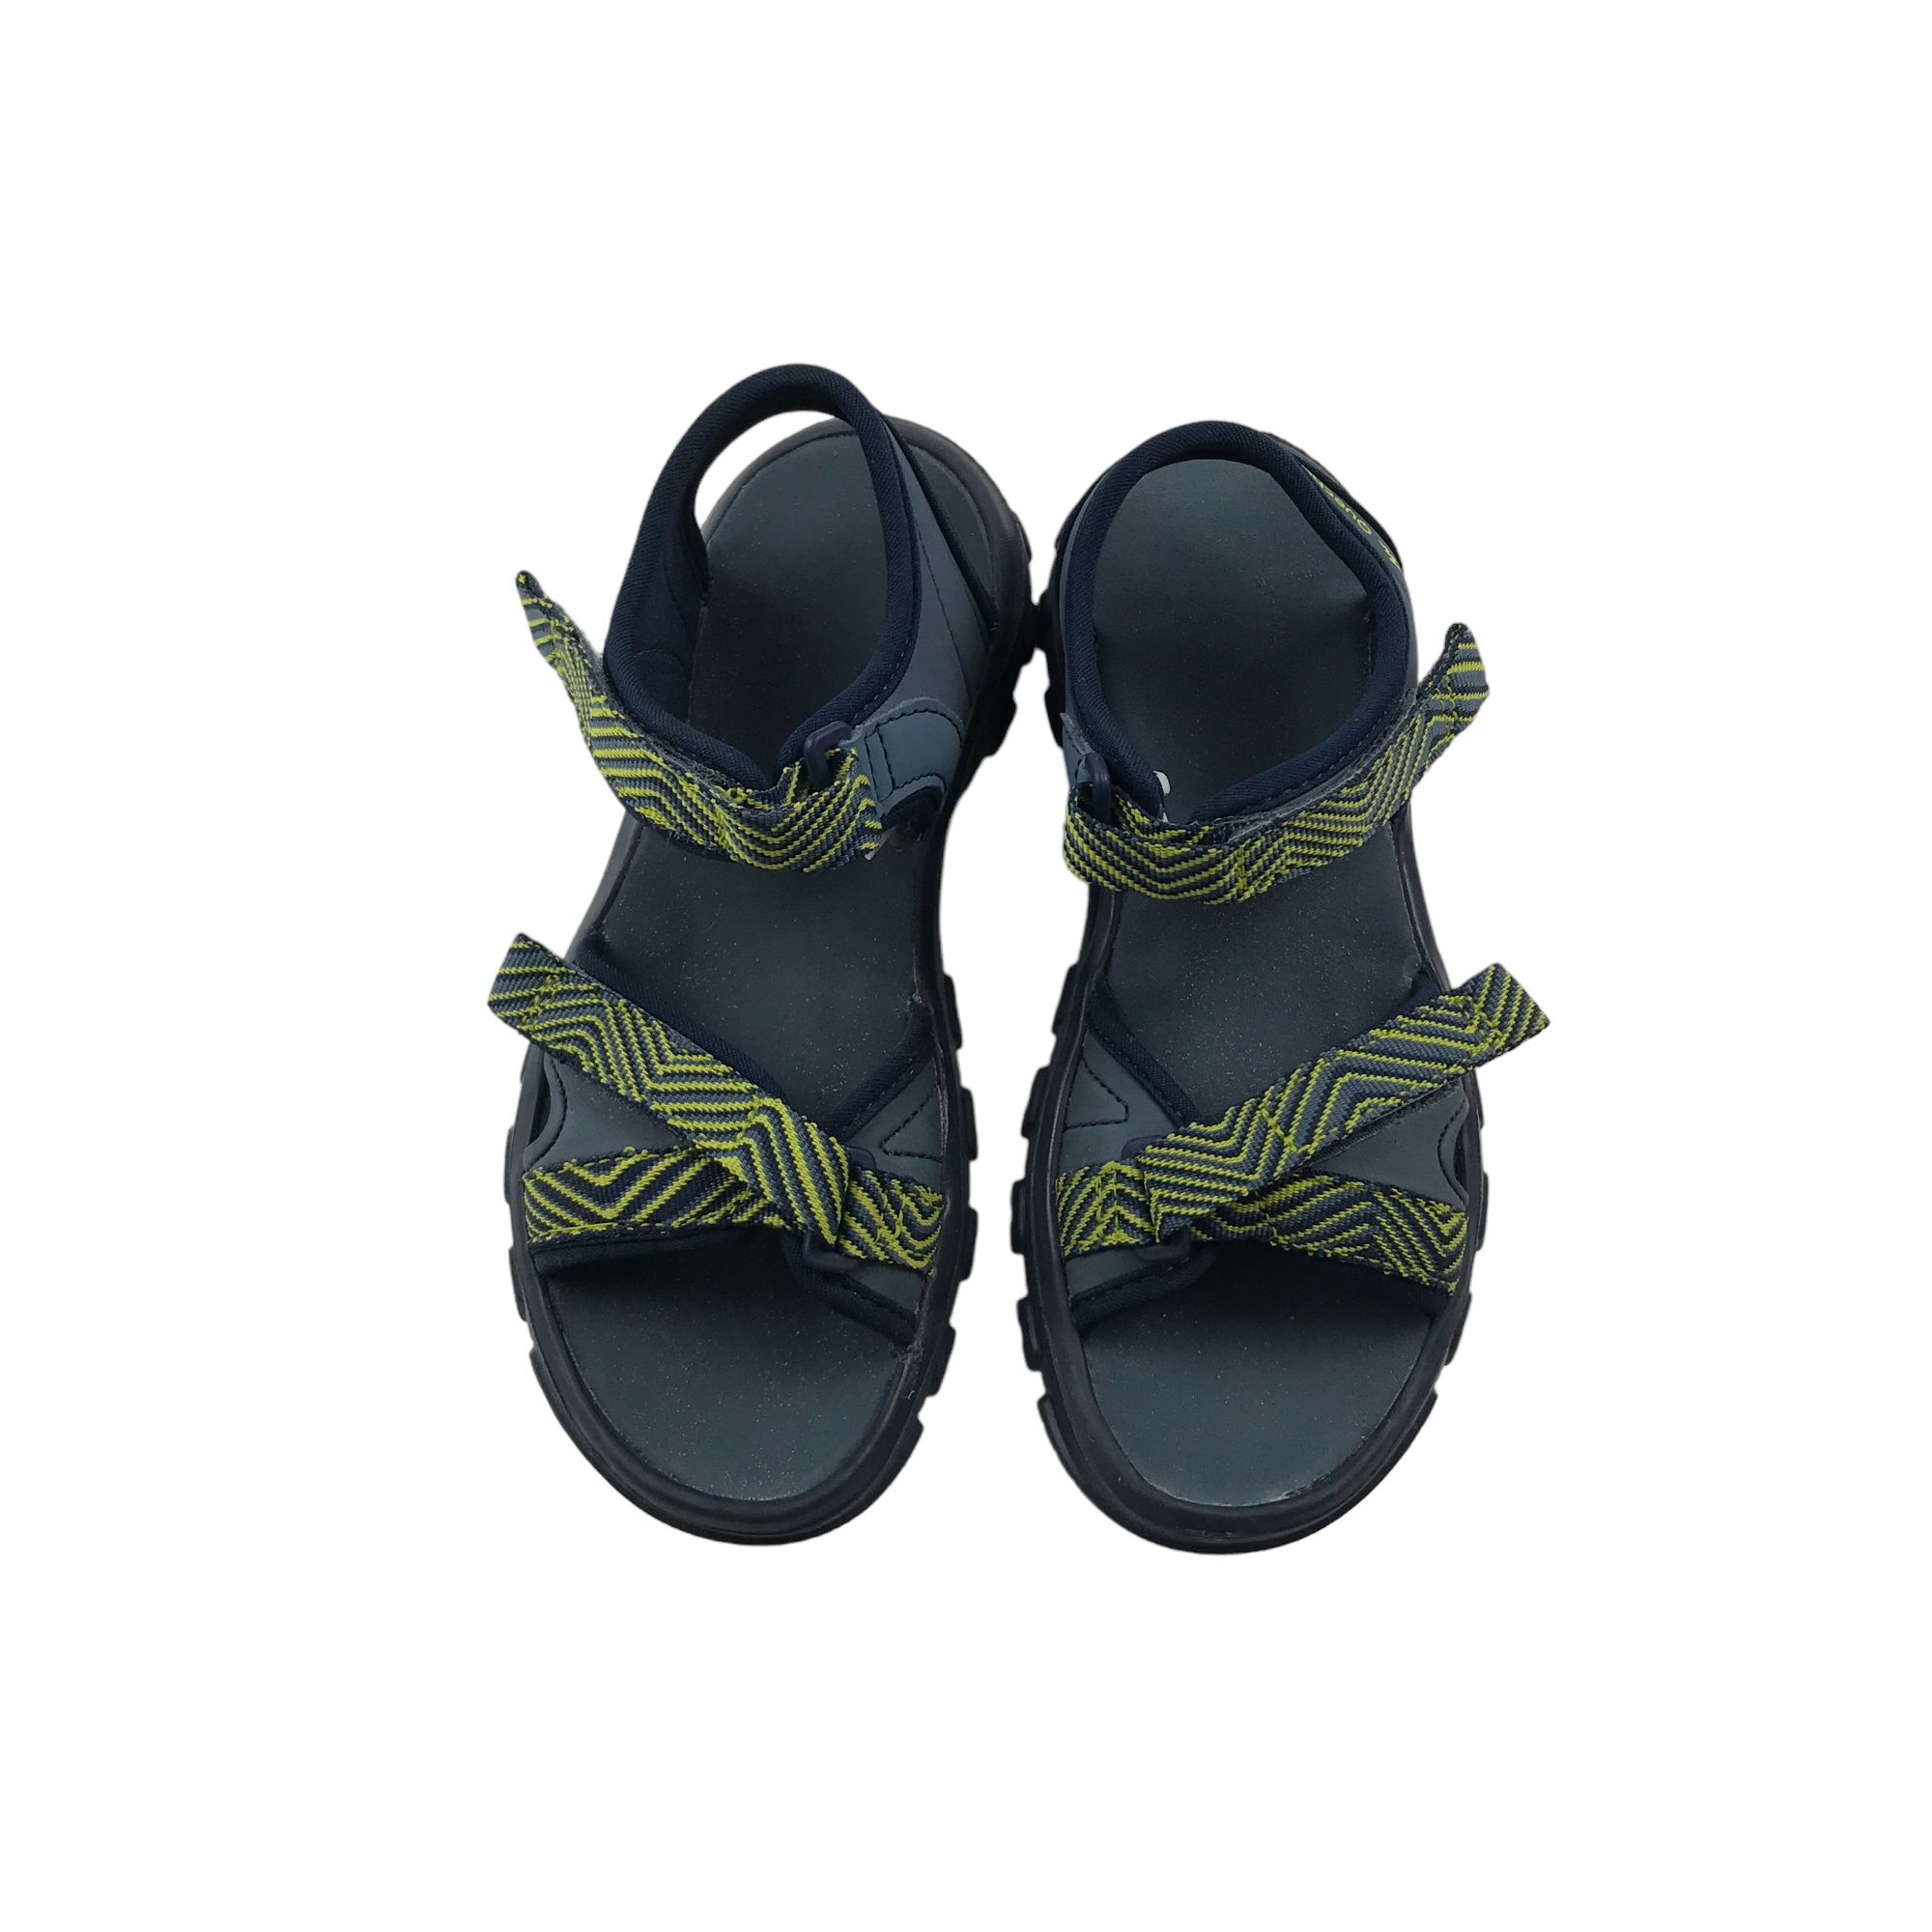 Quechua MH100 Hiking Sandals Kids' | Hiking sandals, Sandals, Summer hike